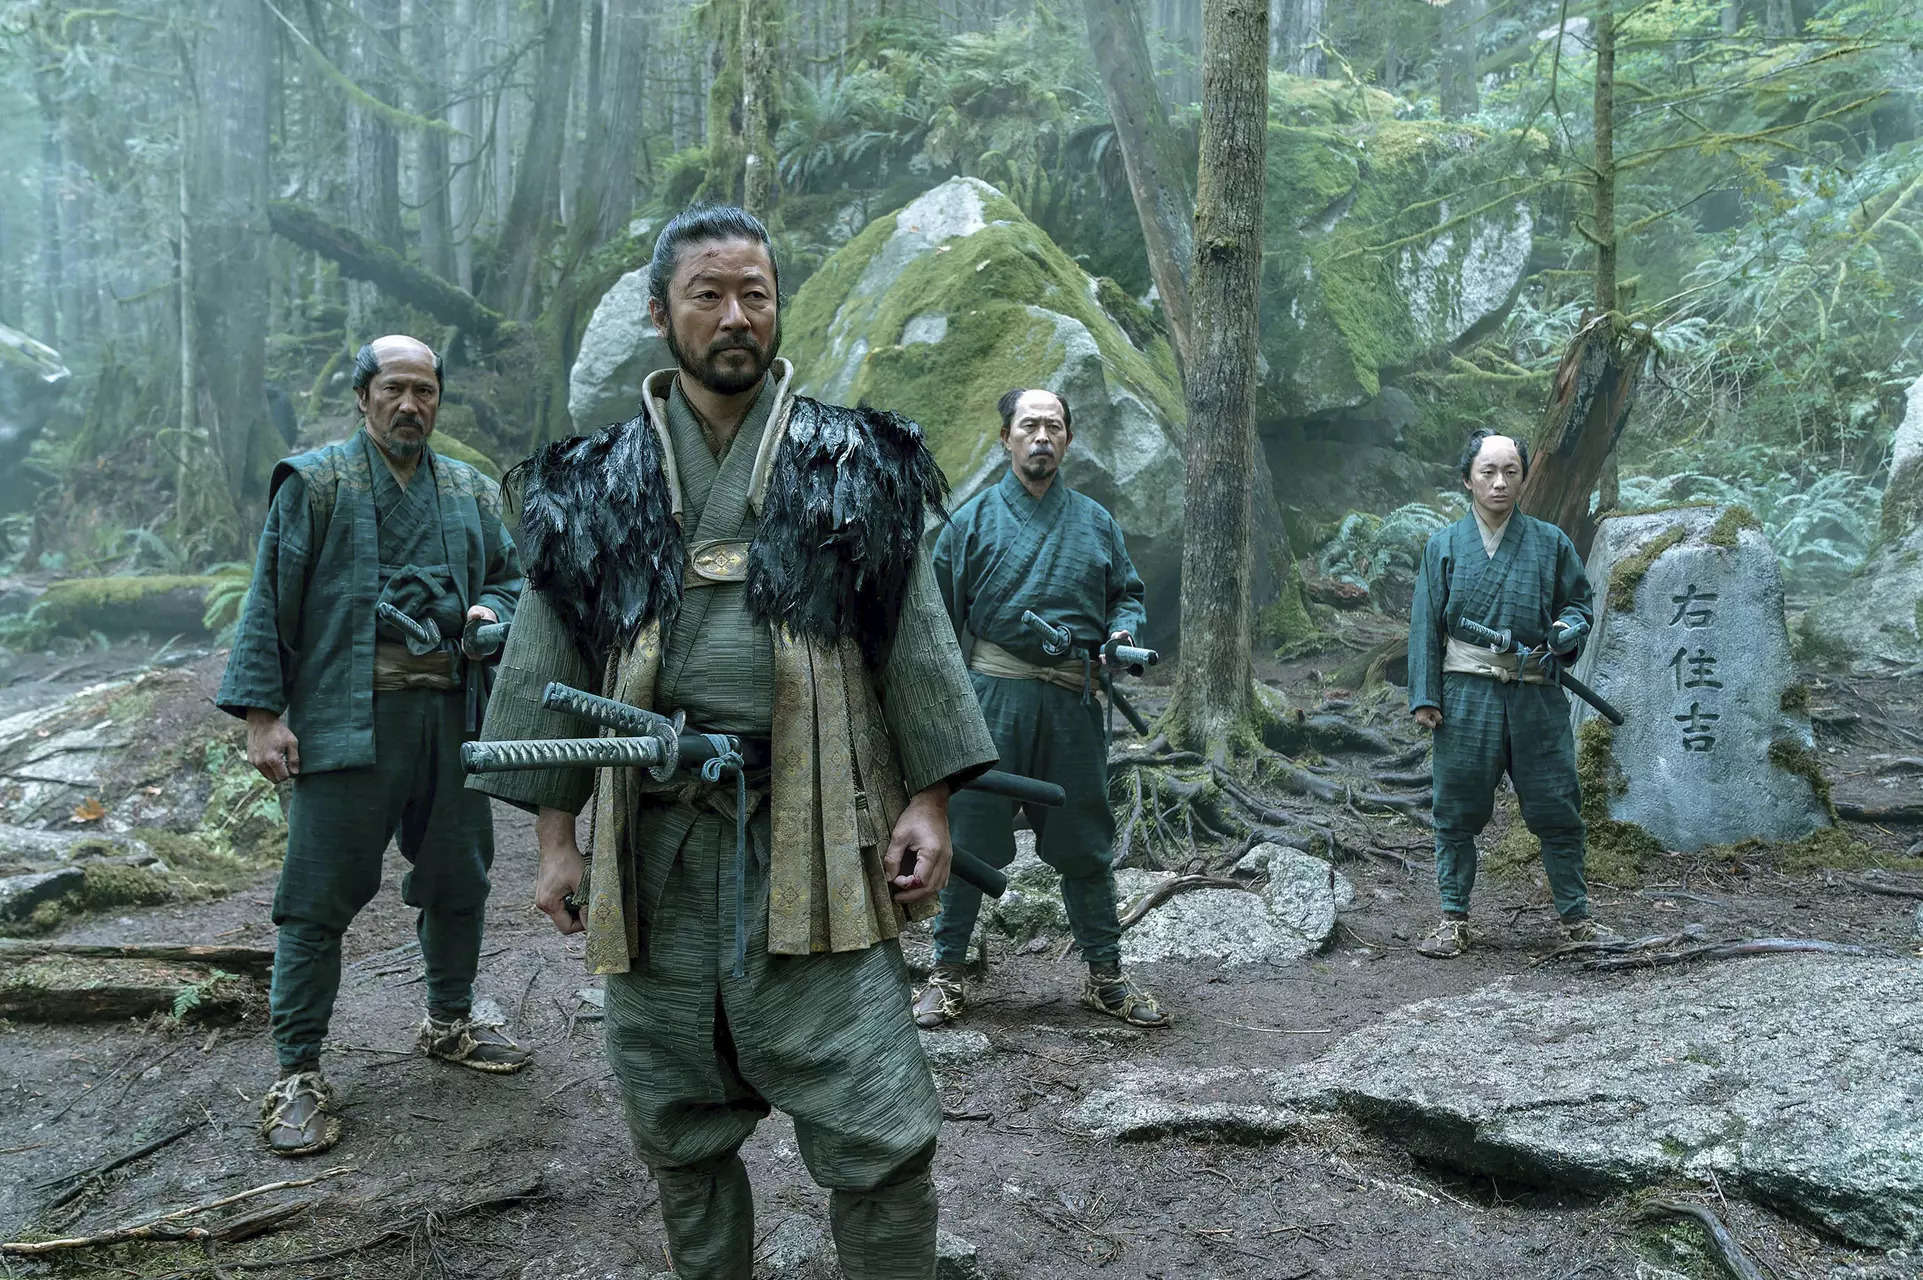 Will there be 'Shogun' Season 2? Creators Rachel Kondo and Justin Marks have said this 